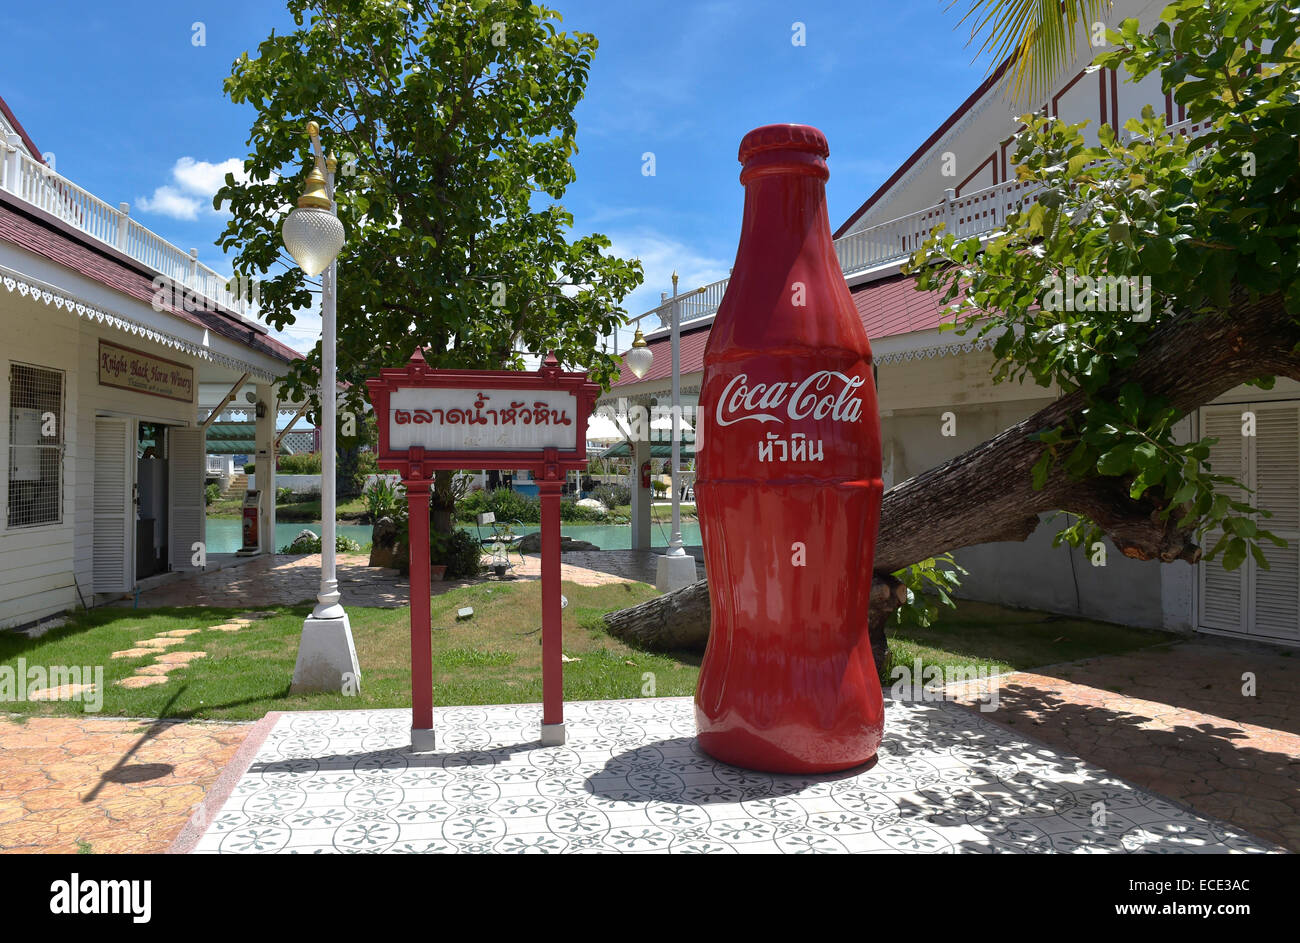 Giant Coca-Cola bottle, Hua Hin, Thailand Stock Photo